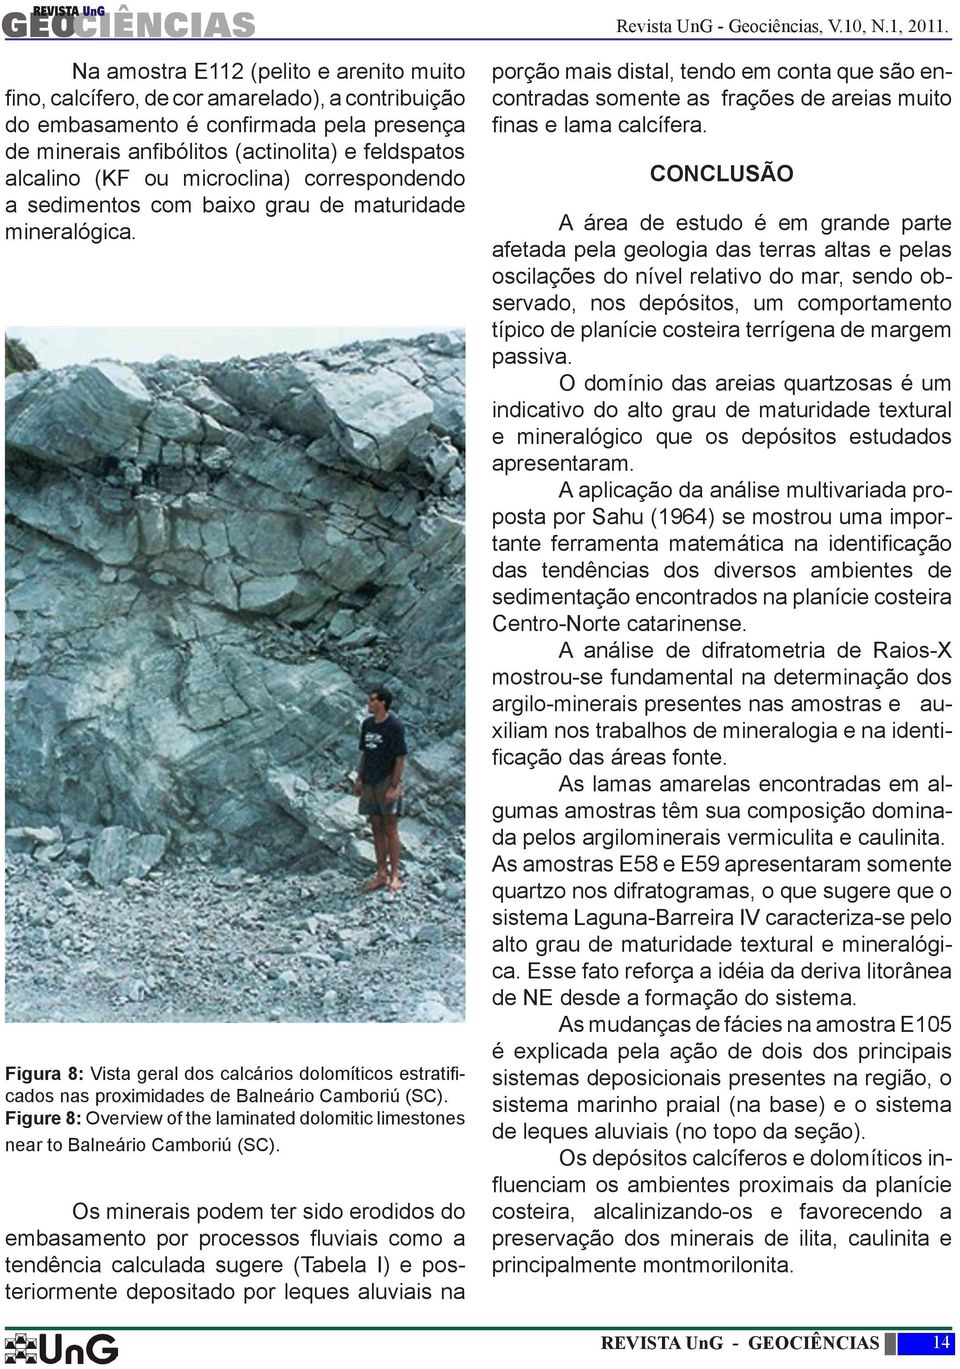 Figure 8: Overview of the laminated dolomitic limestones near to Balneário Camboriú (SC).